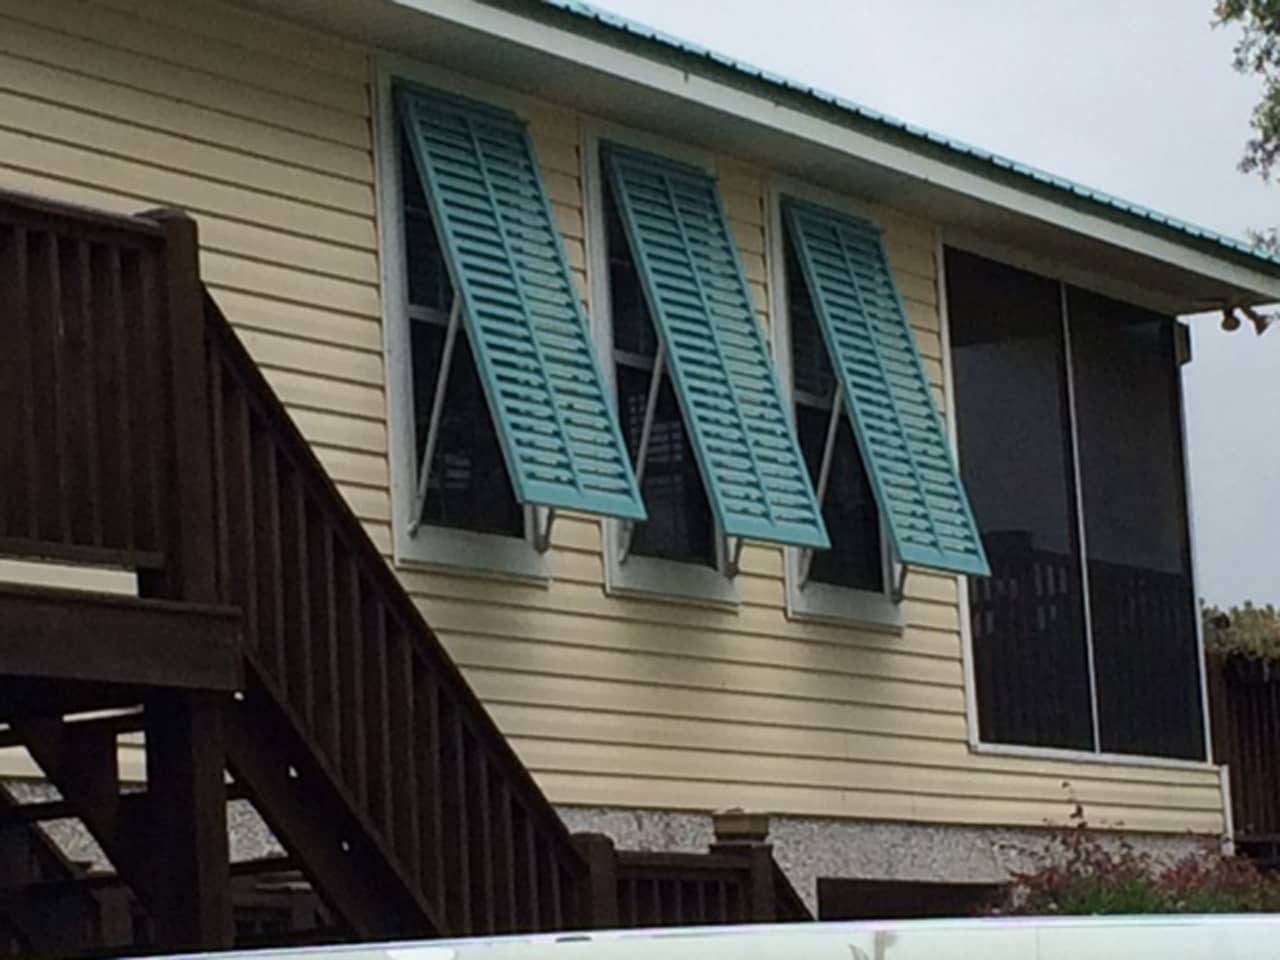 Bahama shutters on house with siding